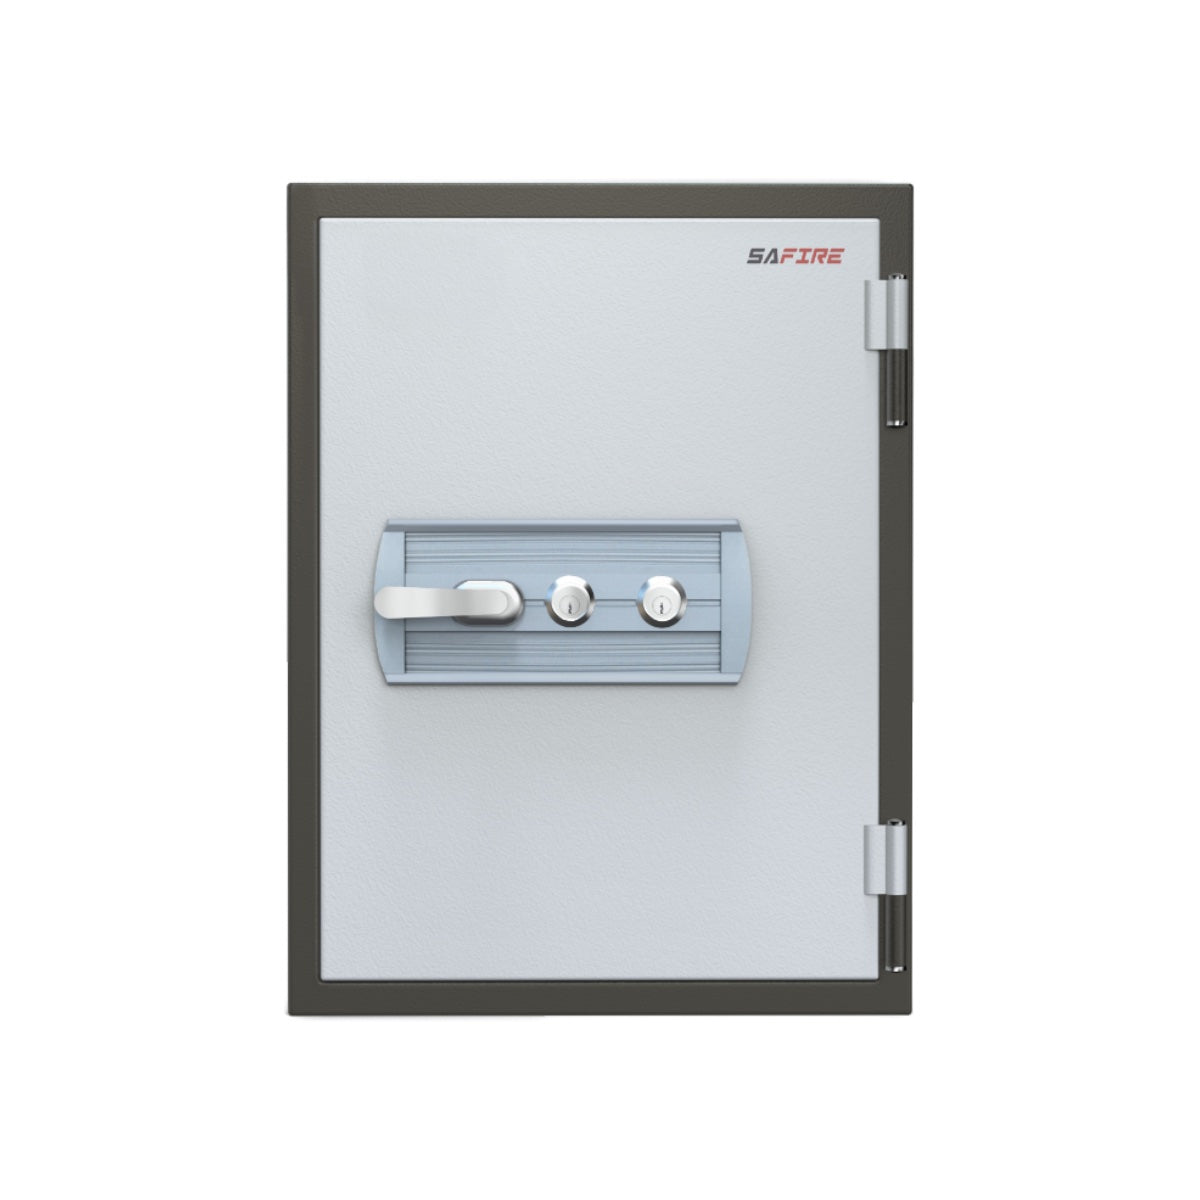 SAFIRE FR40 Fire Resistant Safe with 2 Key Lock, Grey